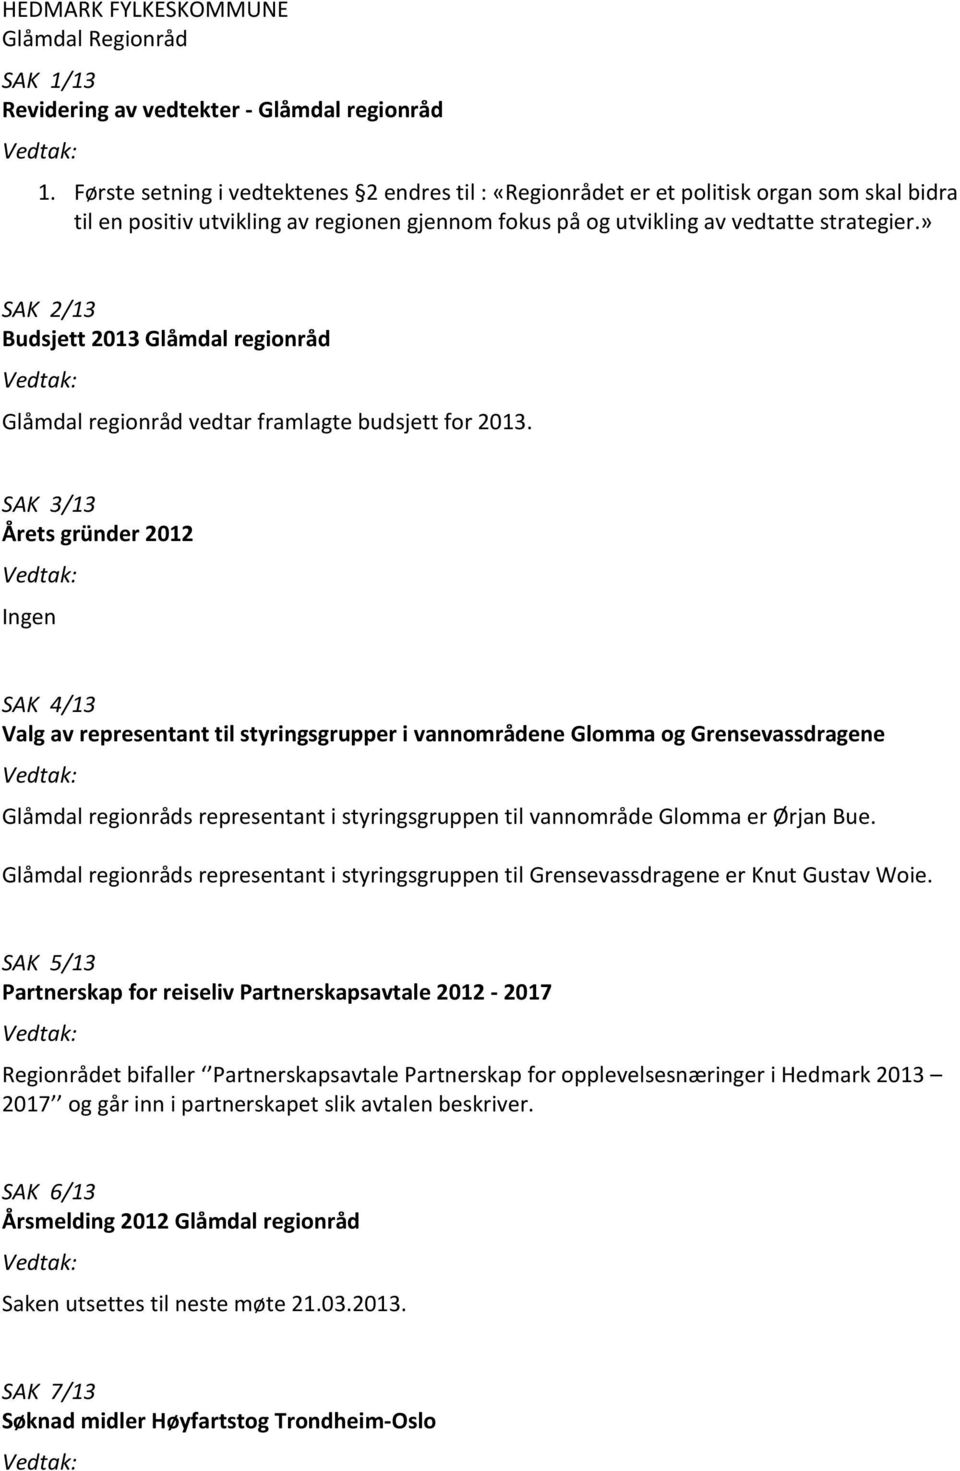 » SAK 2/13 Budsjett 2013 Glåmdal regionråd Glåmdal regionråd vedtar framlagte budsjett for 2013.